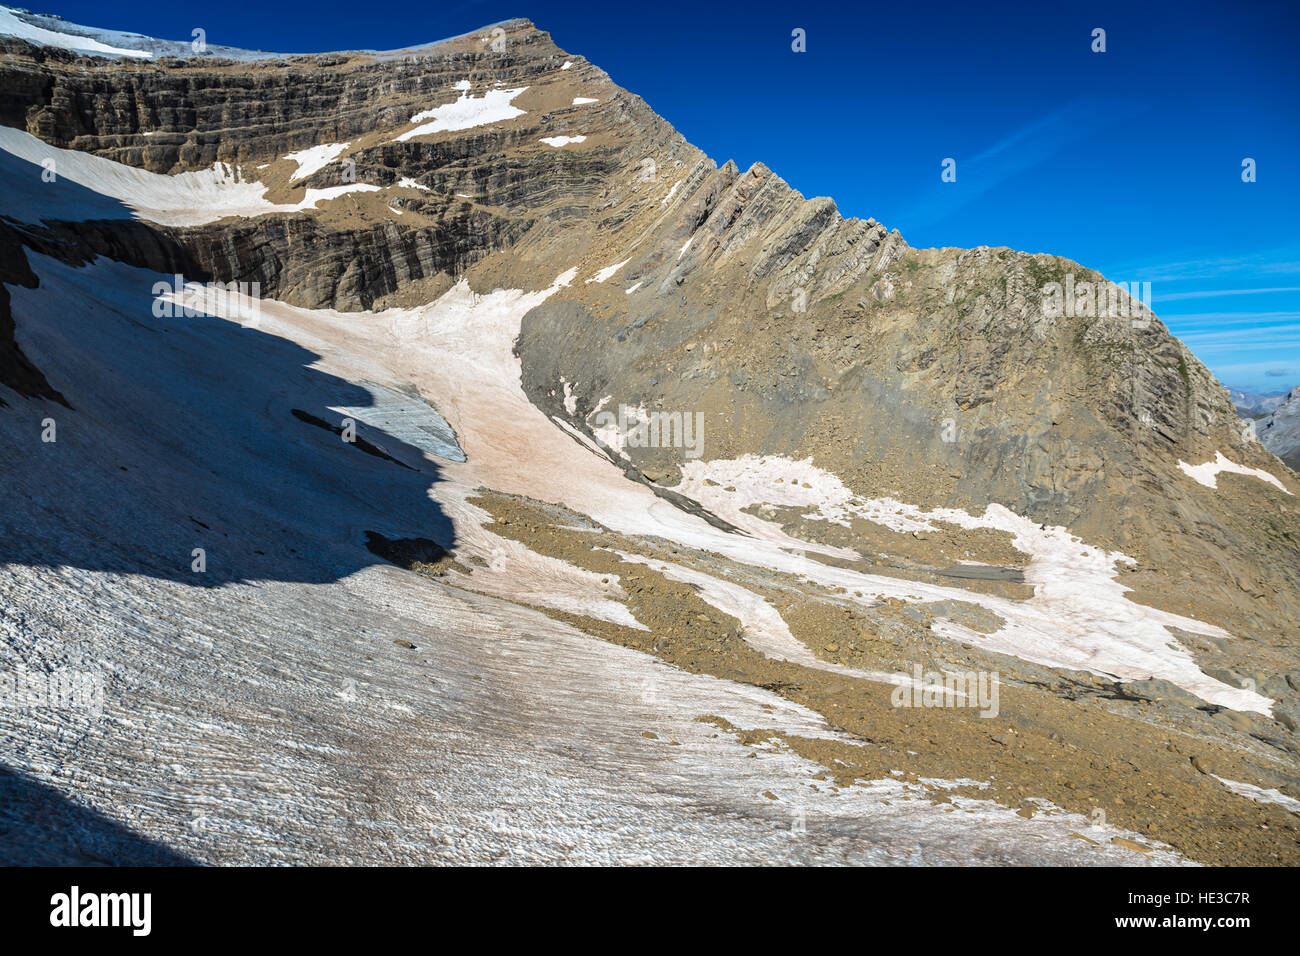 Glacier in the Cirque de Gavarnie in the central Pyrenees - France Stock Photo